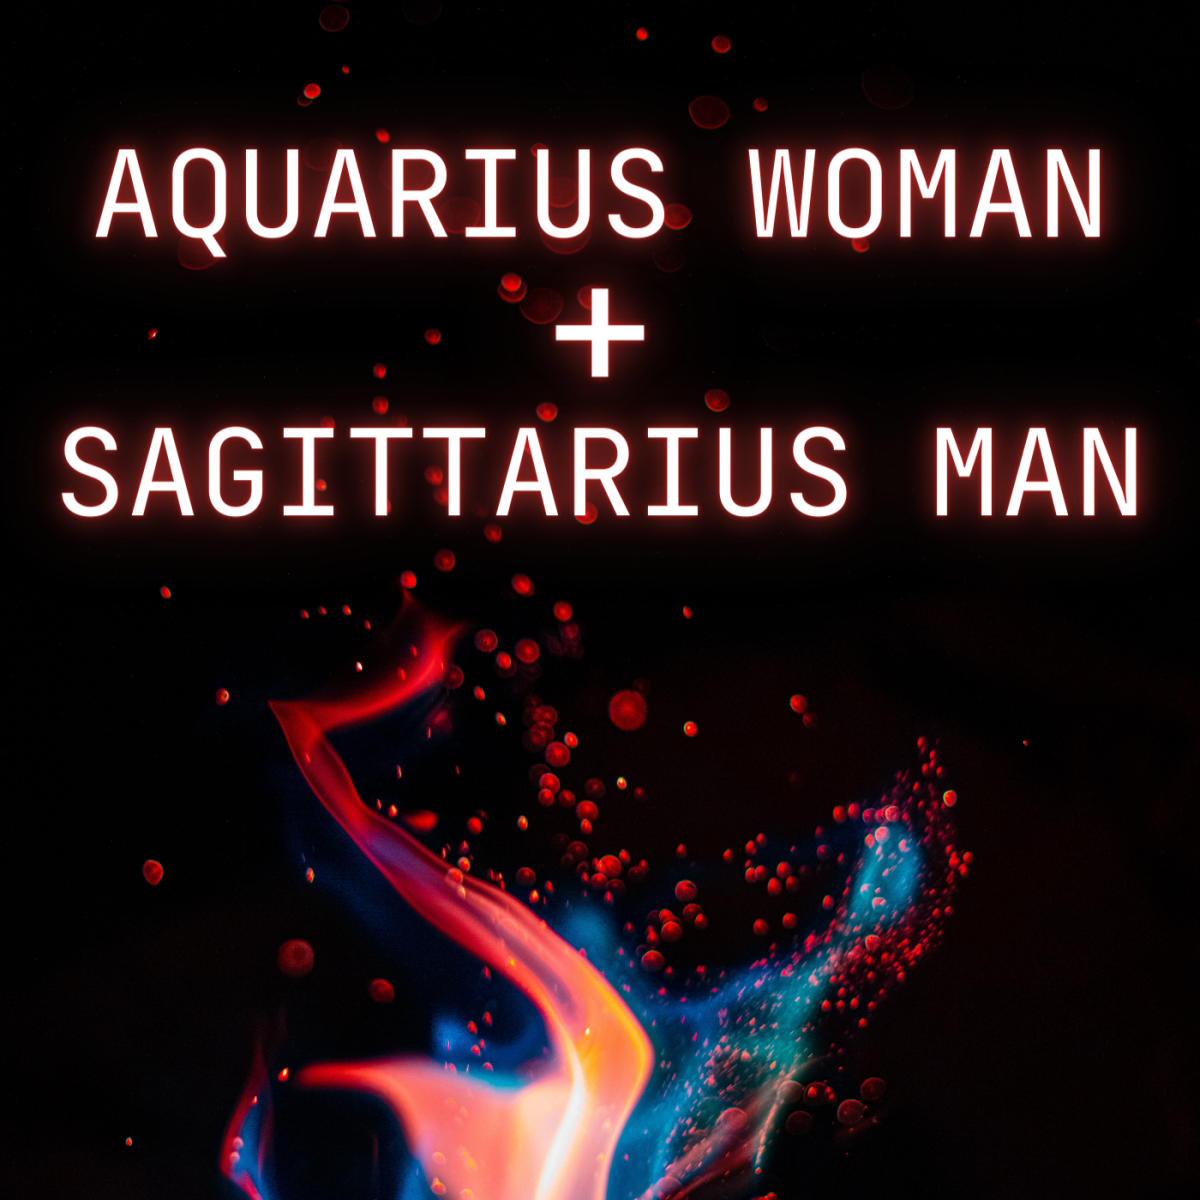 Sagittarius Man and Aquarius Woman